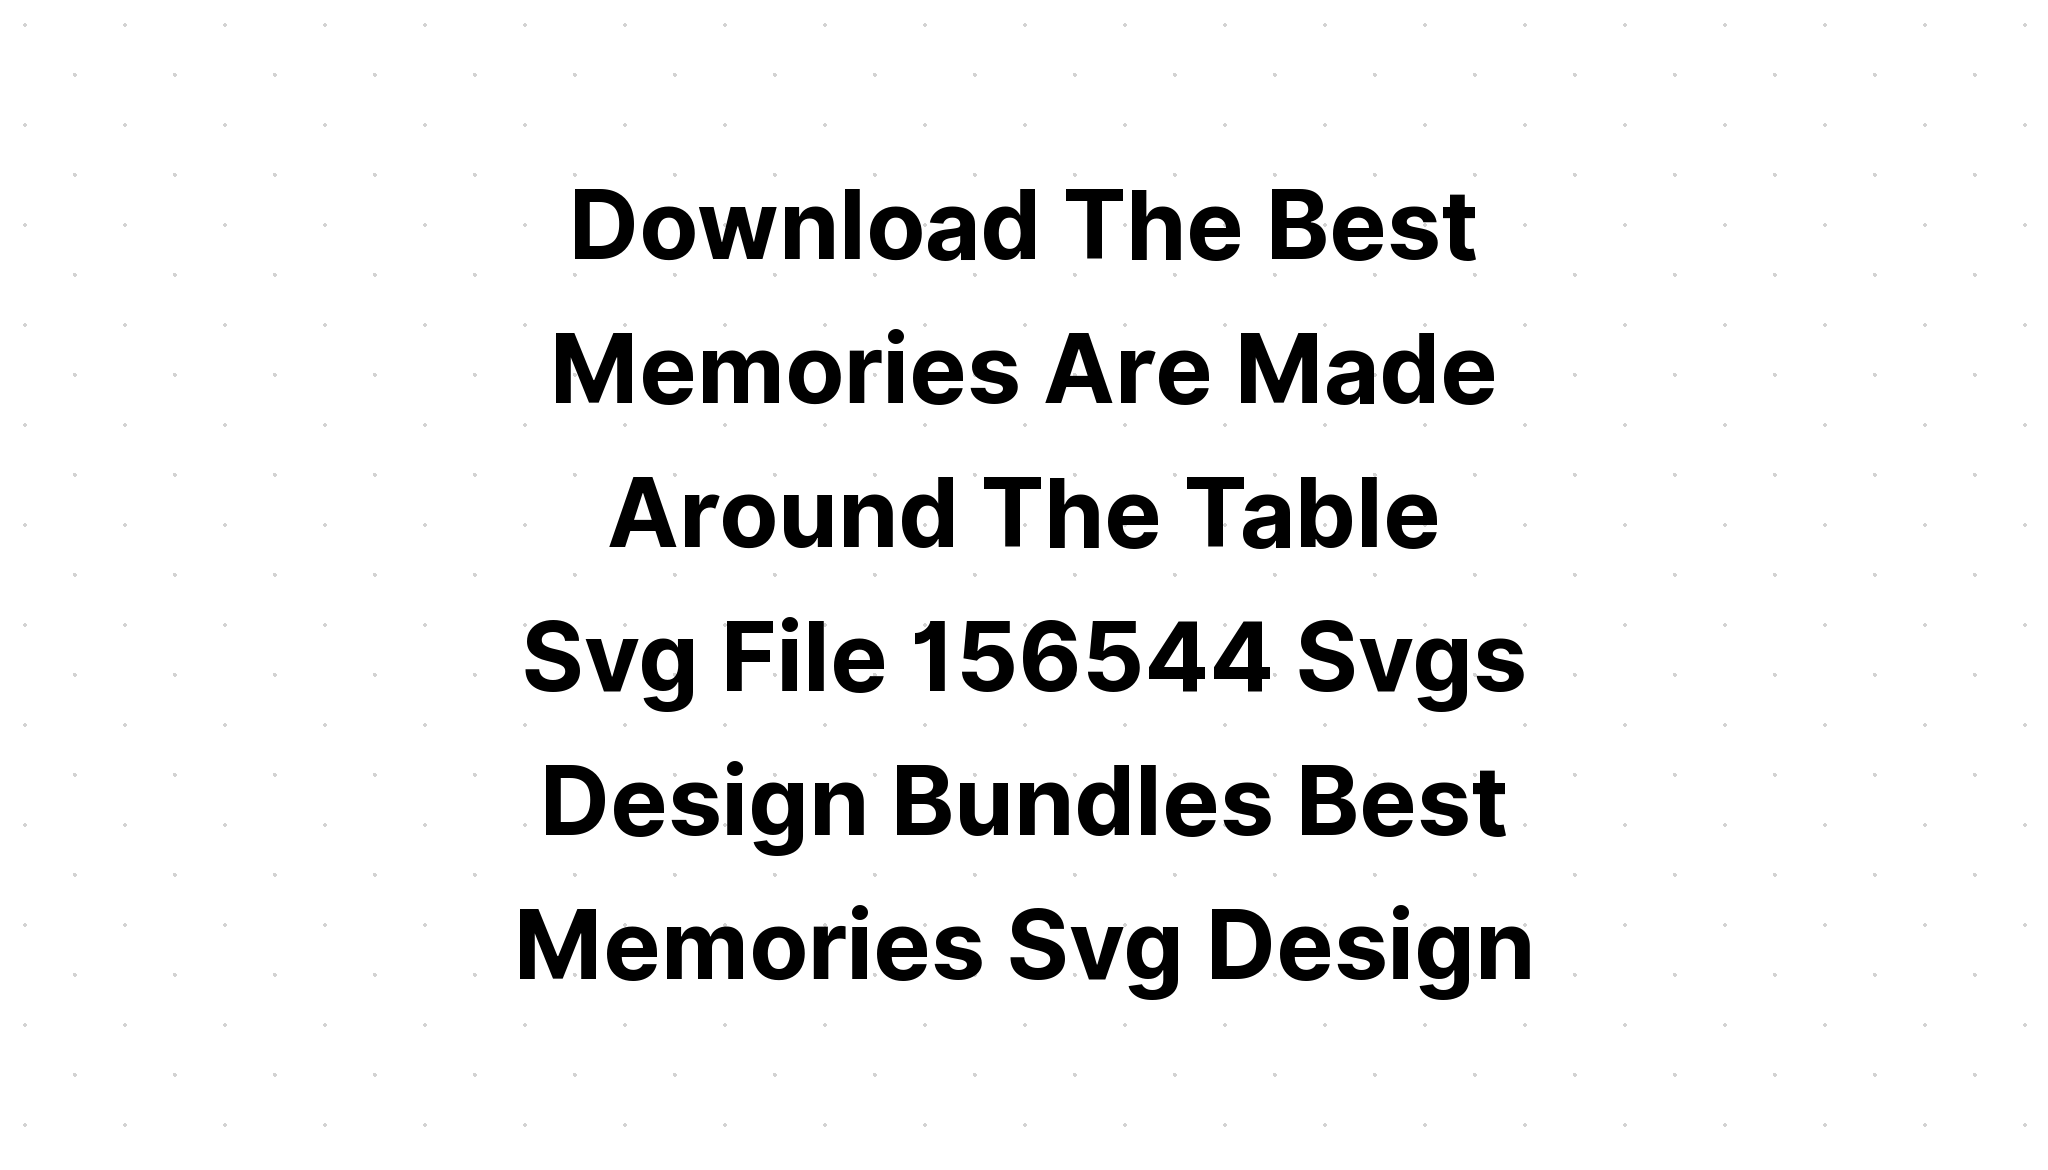 Download Our Laughs Memories Friendship SVG File